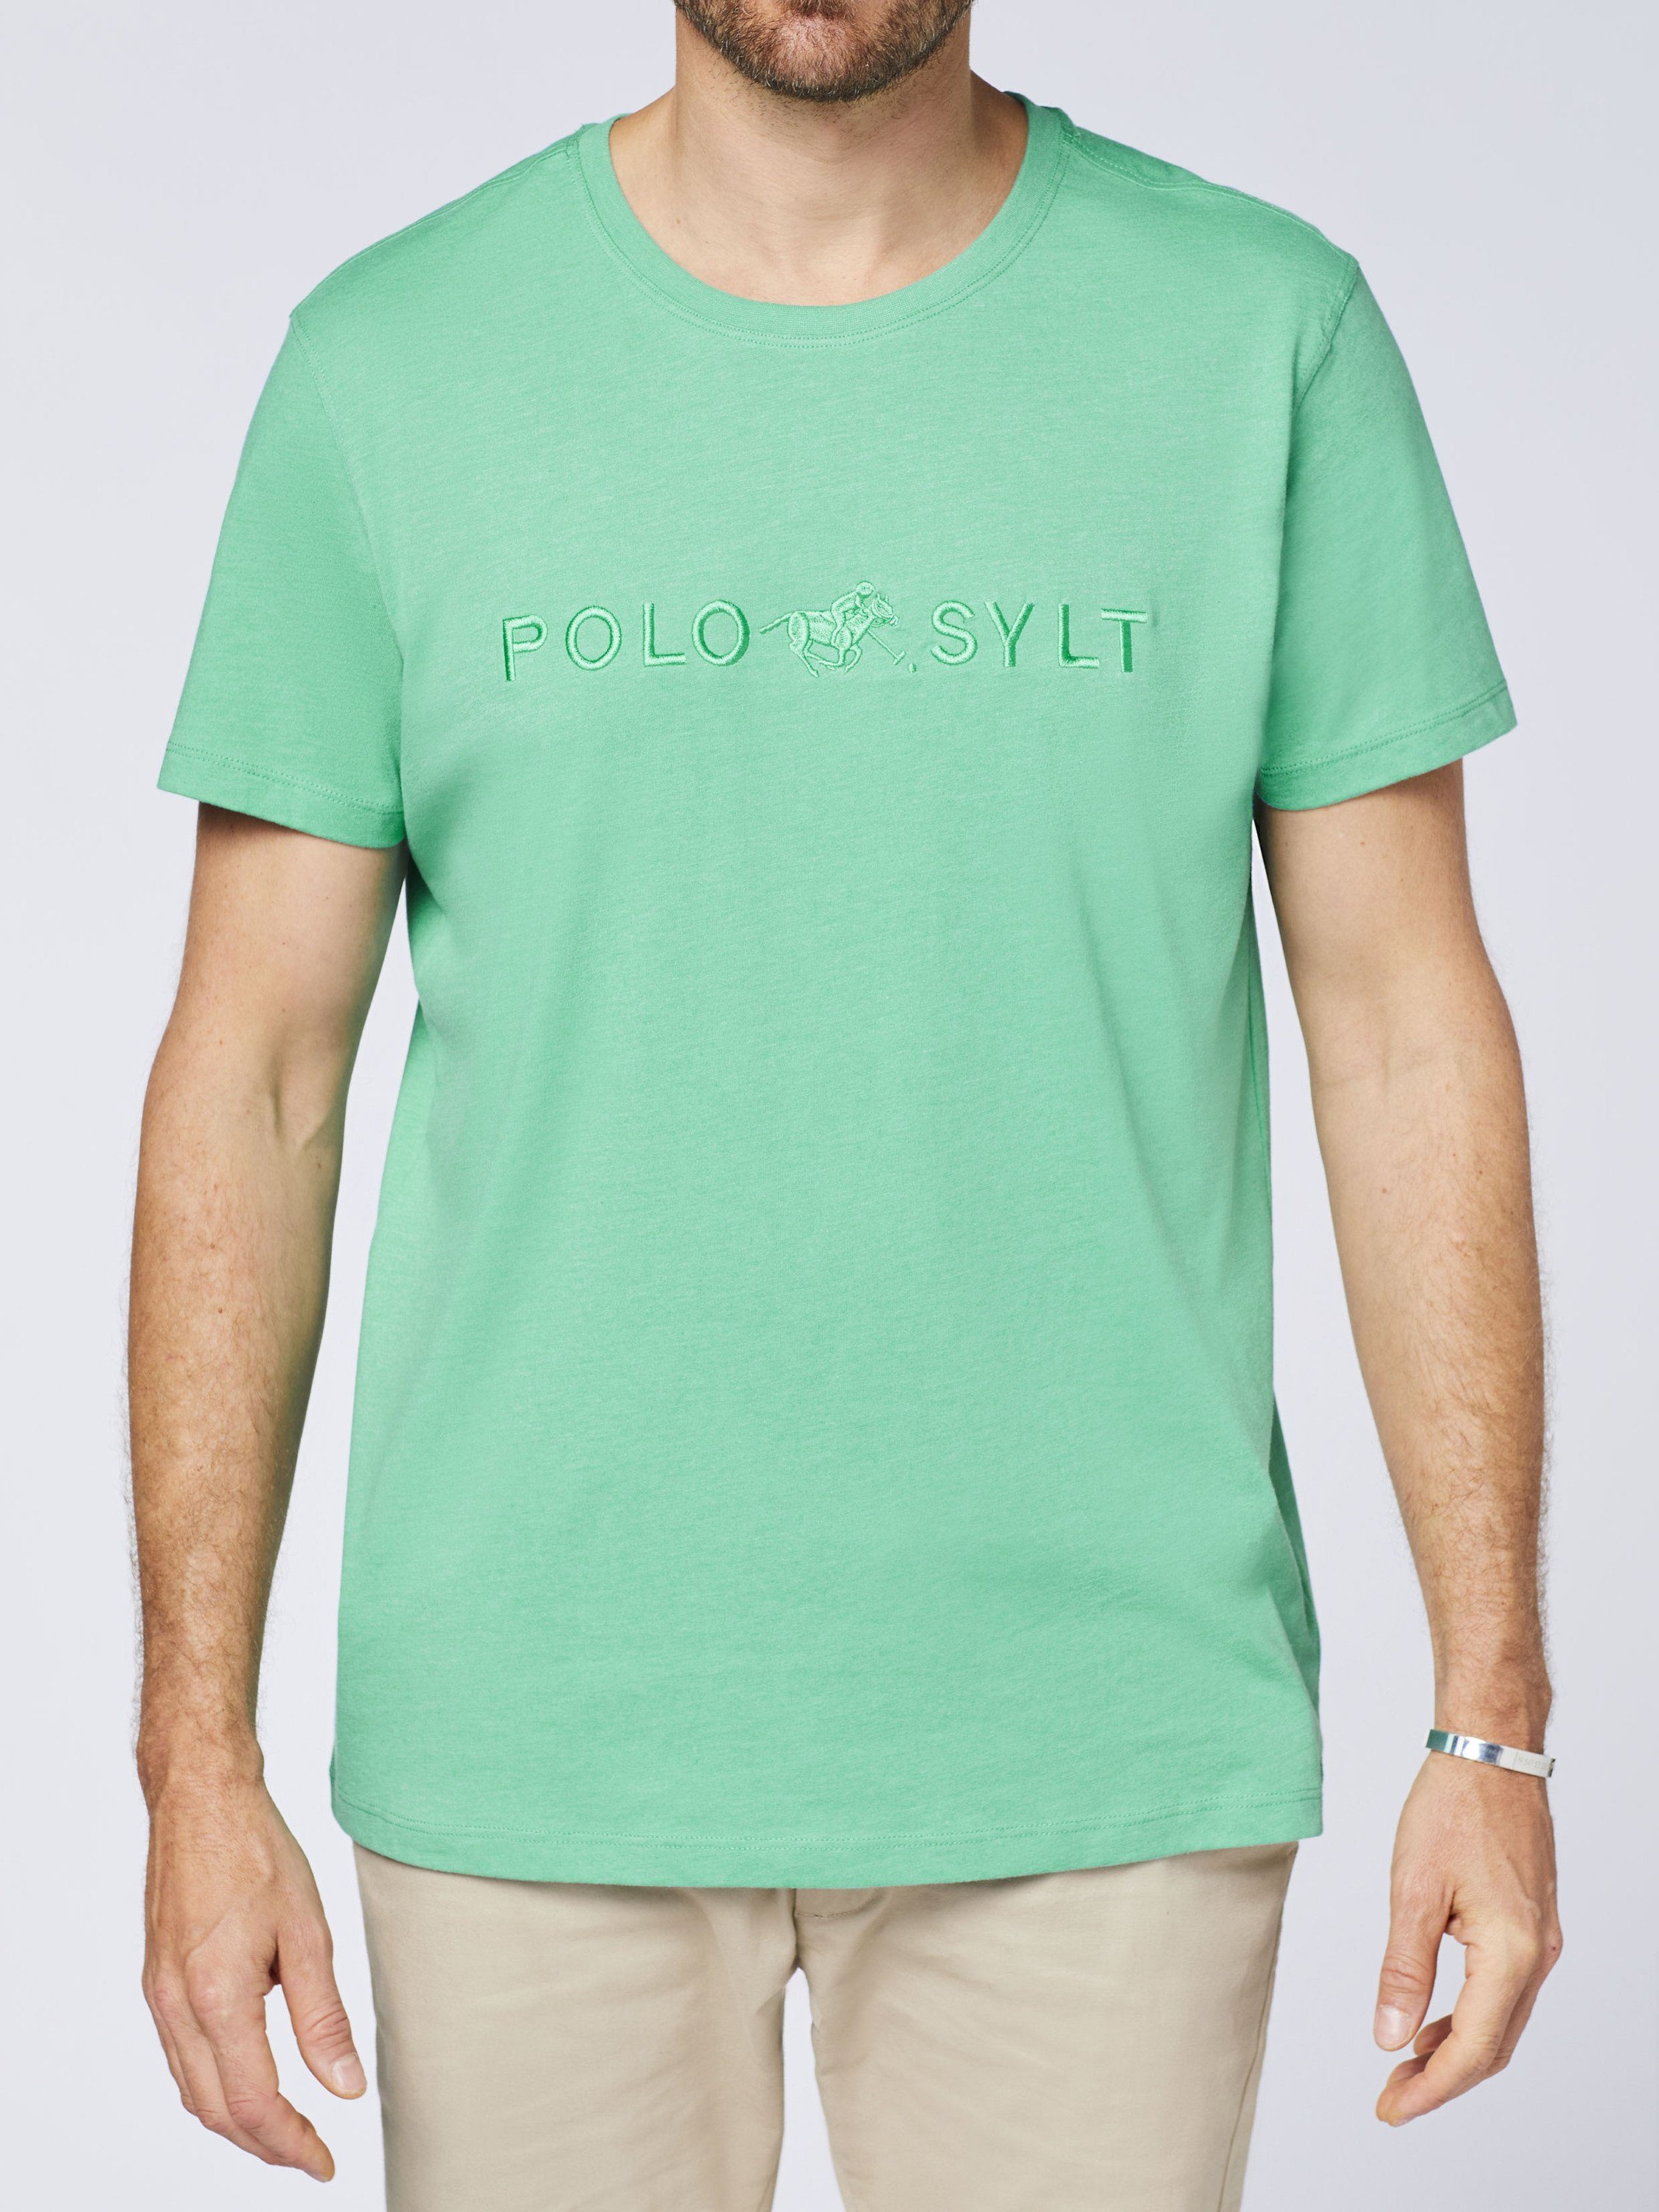 mit Polo 16-5721 Marine Print-Shirt Logo-Schriftzug Green Sylt